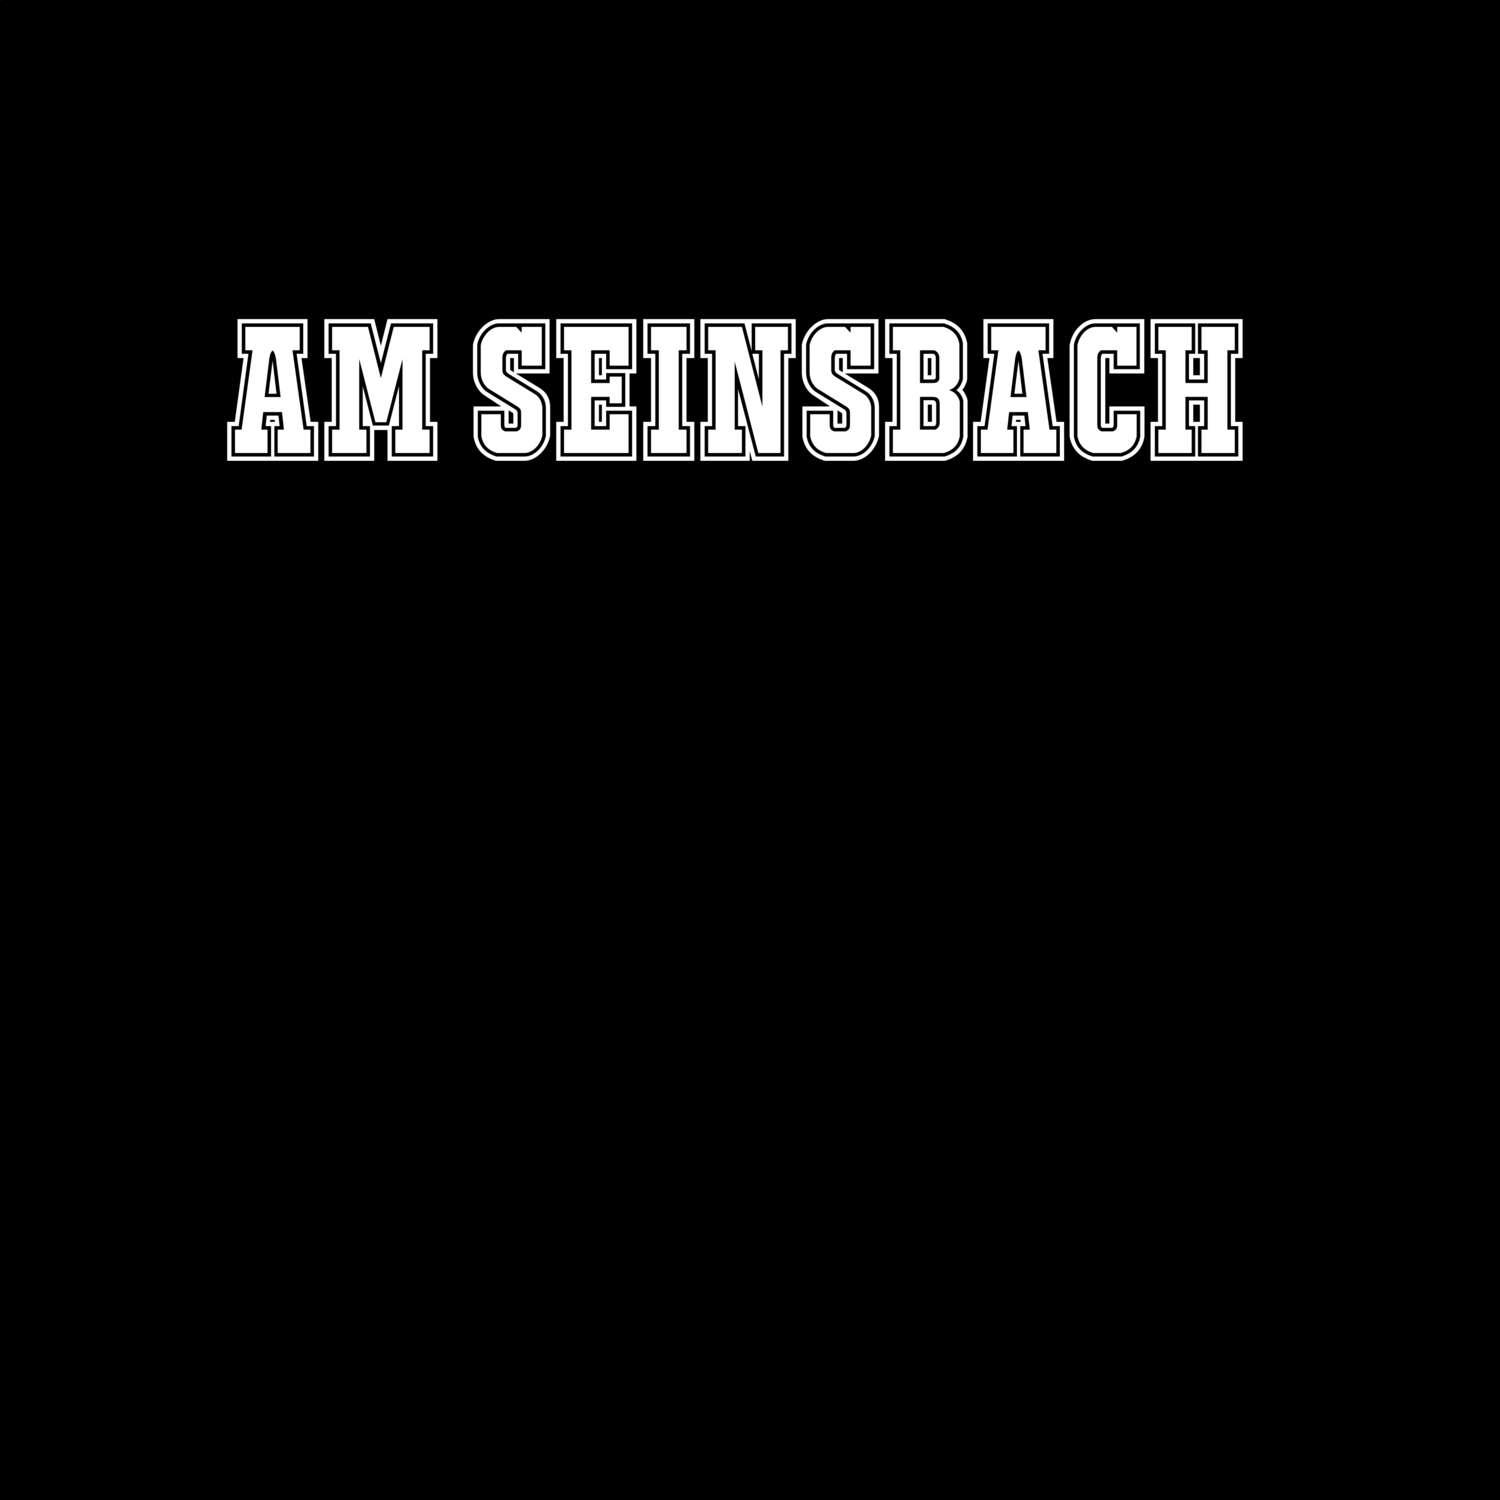 Am Seinsbach T-Shirt »Classic«